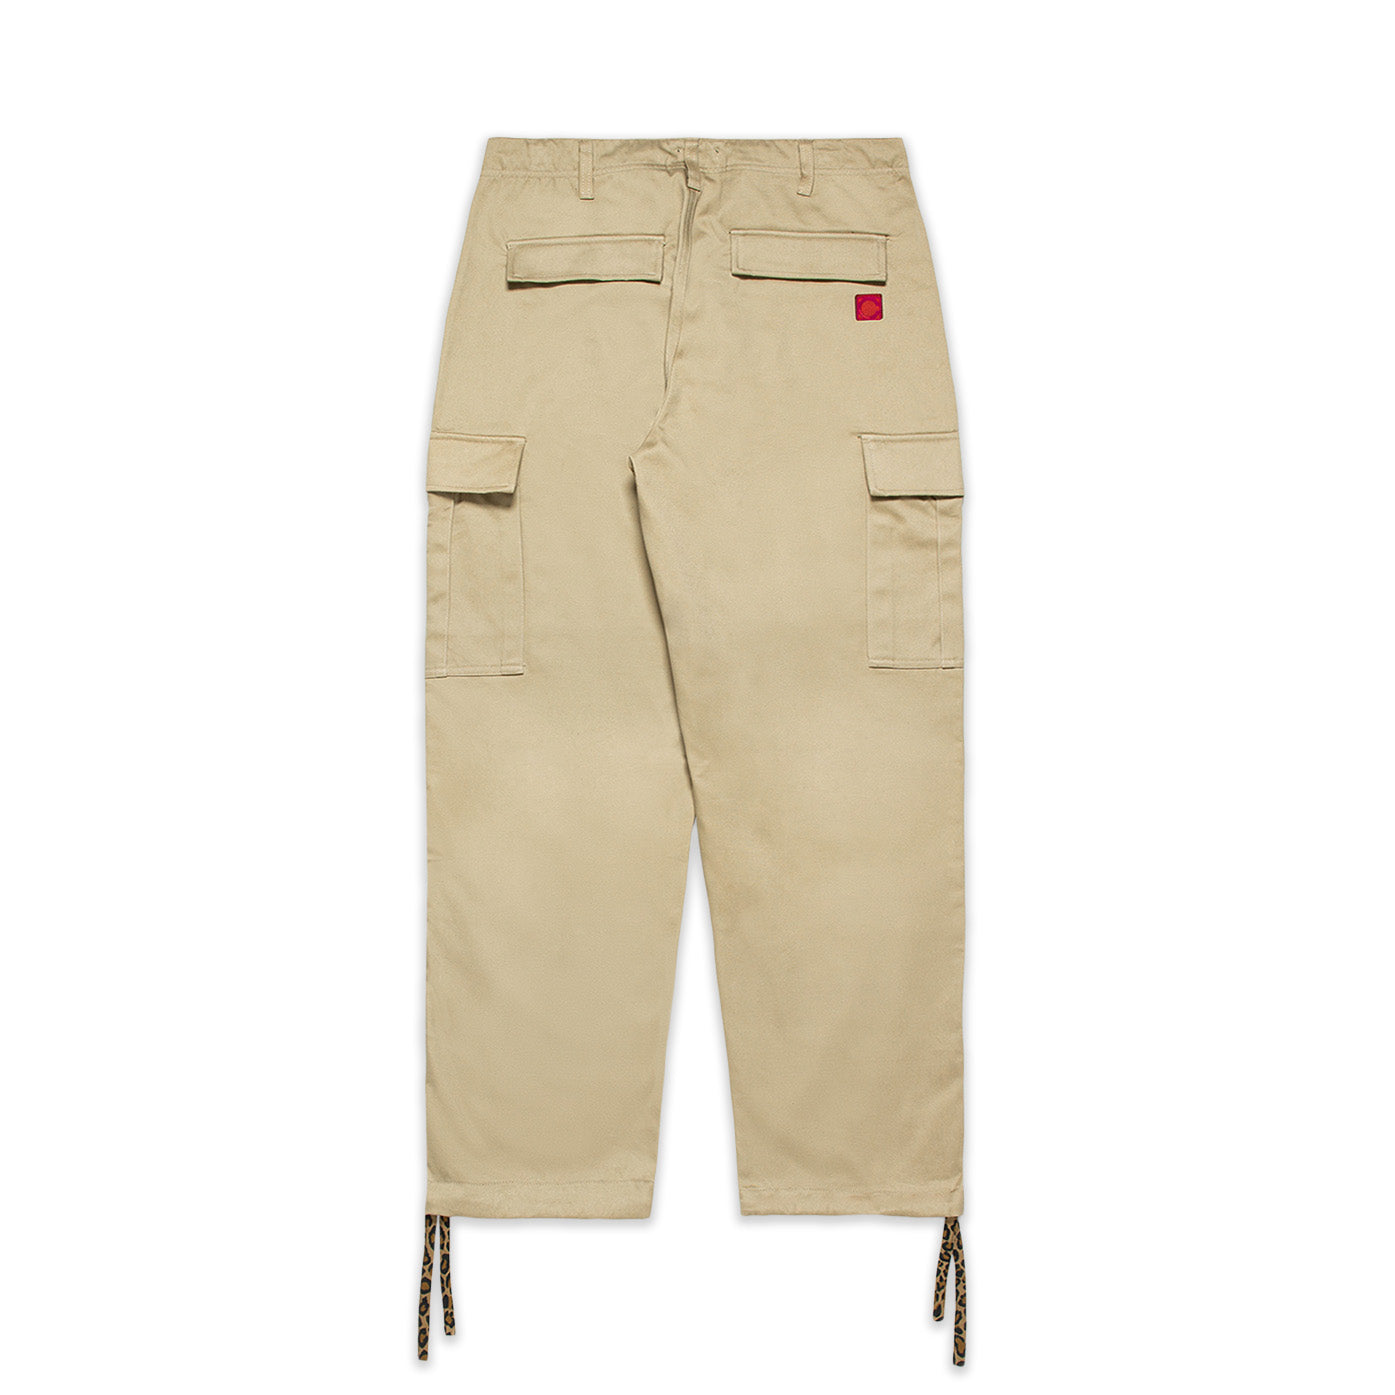 CLOT Men Army Pants Beige - BOTTOMS - Canada